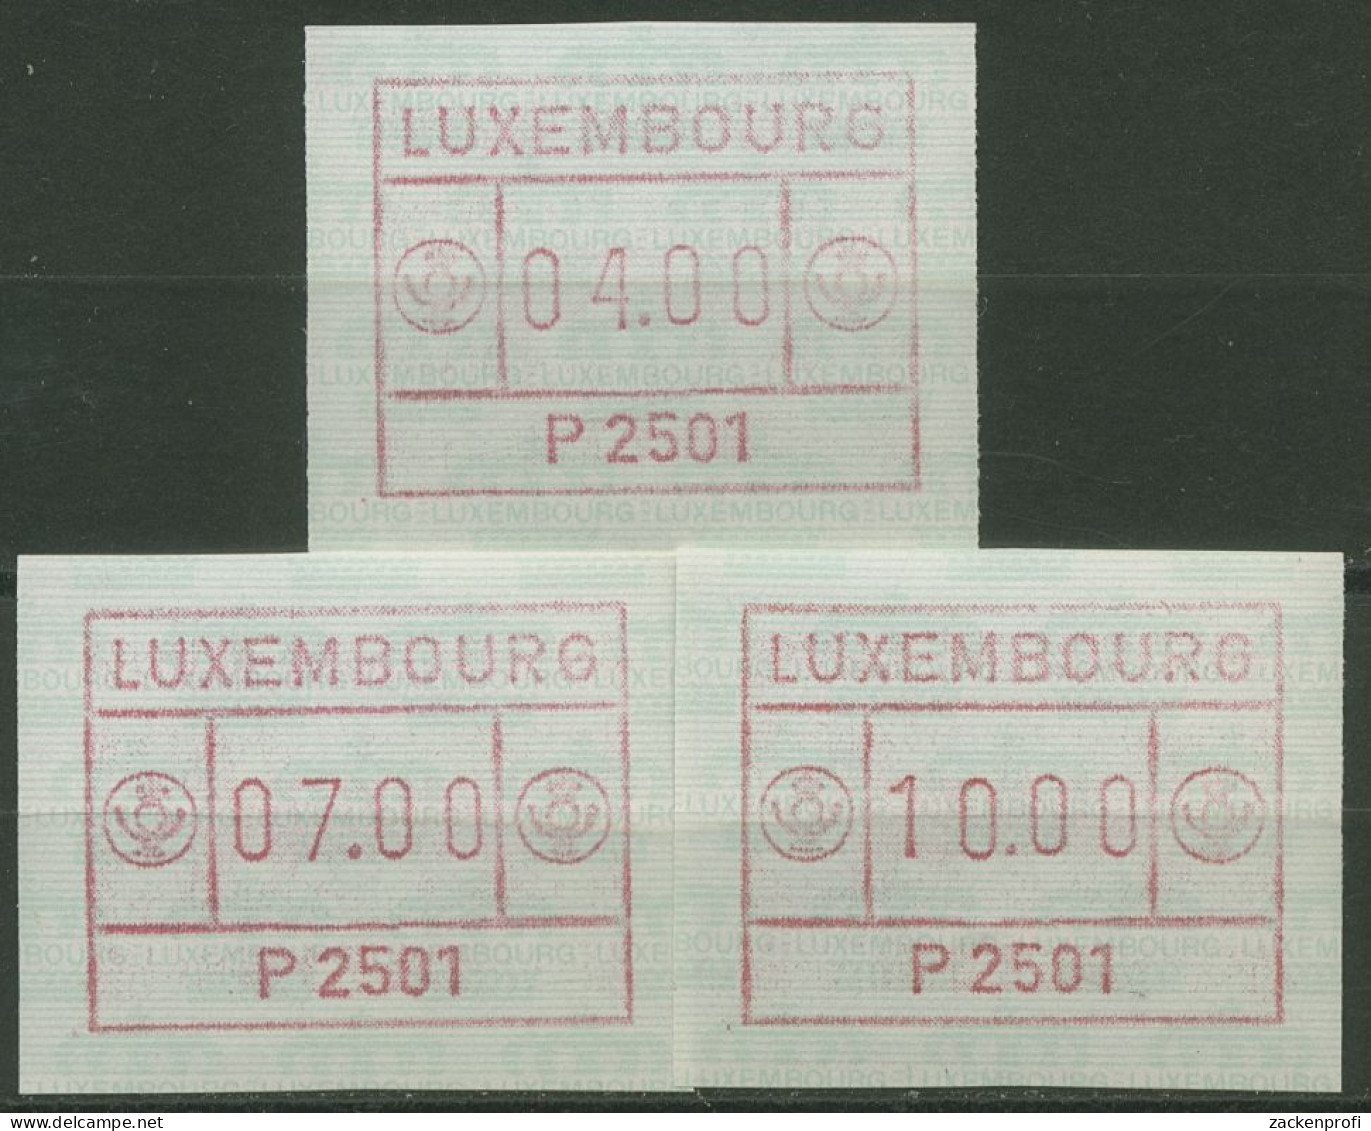 Luxemburg 1983 Automatenmarke Automat P 2501 Satz 1.1.1 B S1 Postfrisch - Automatenmarken